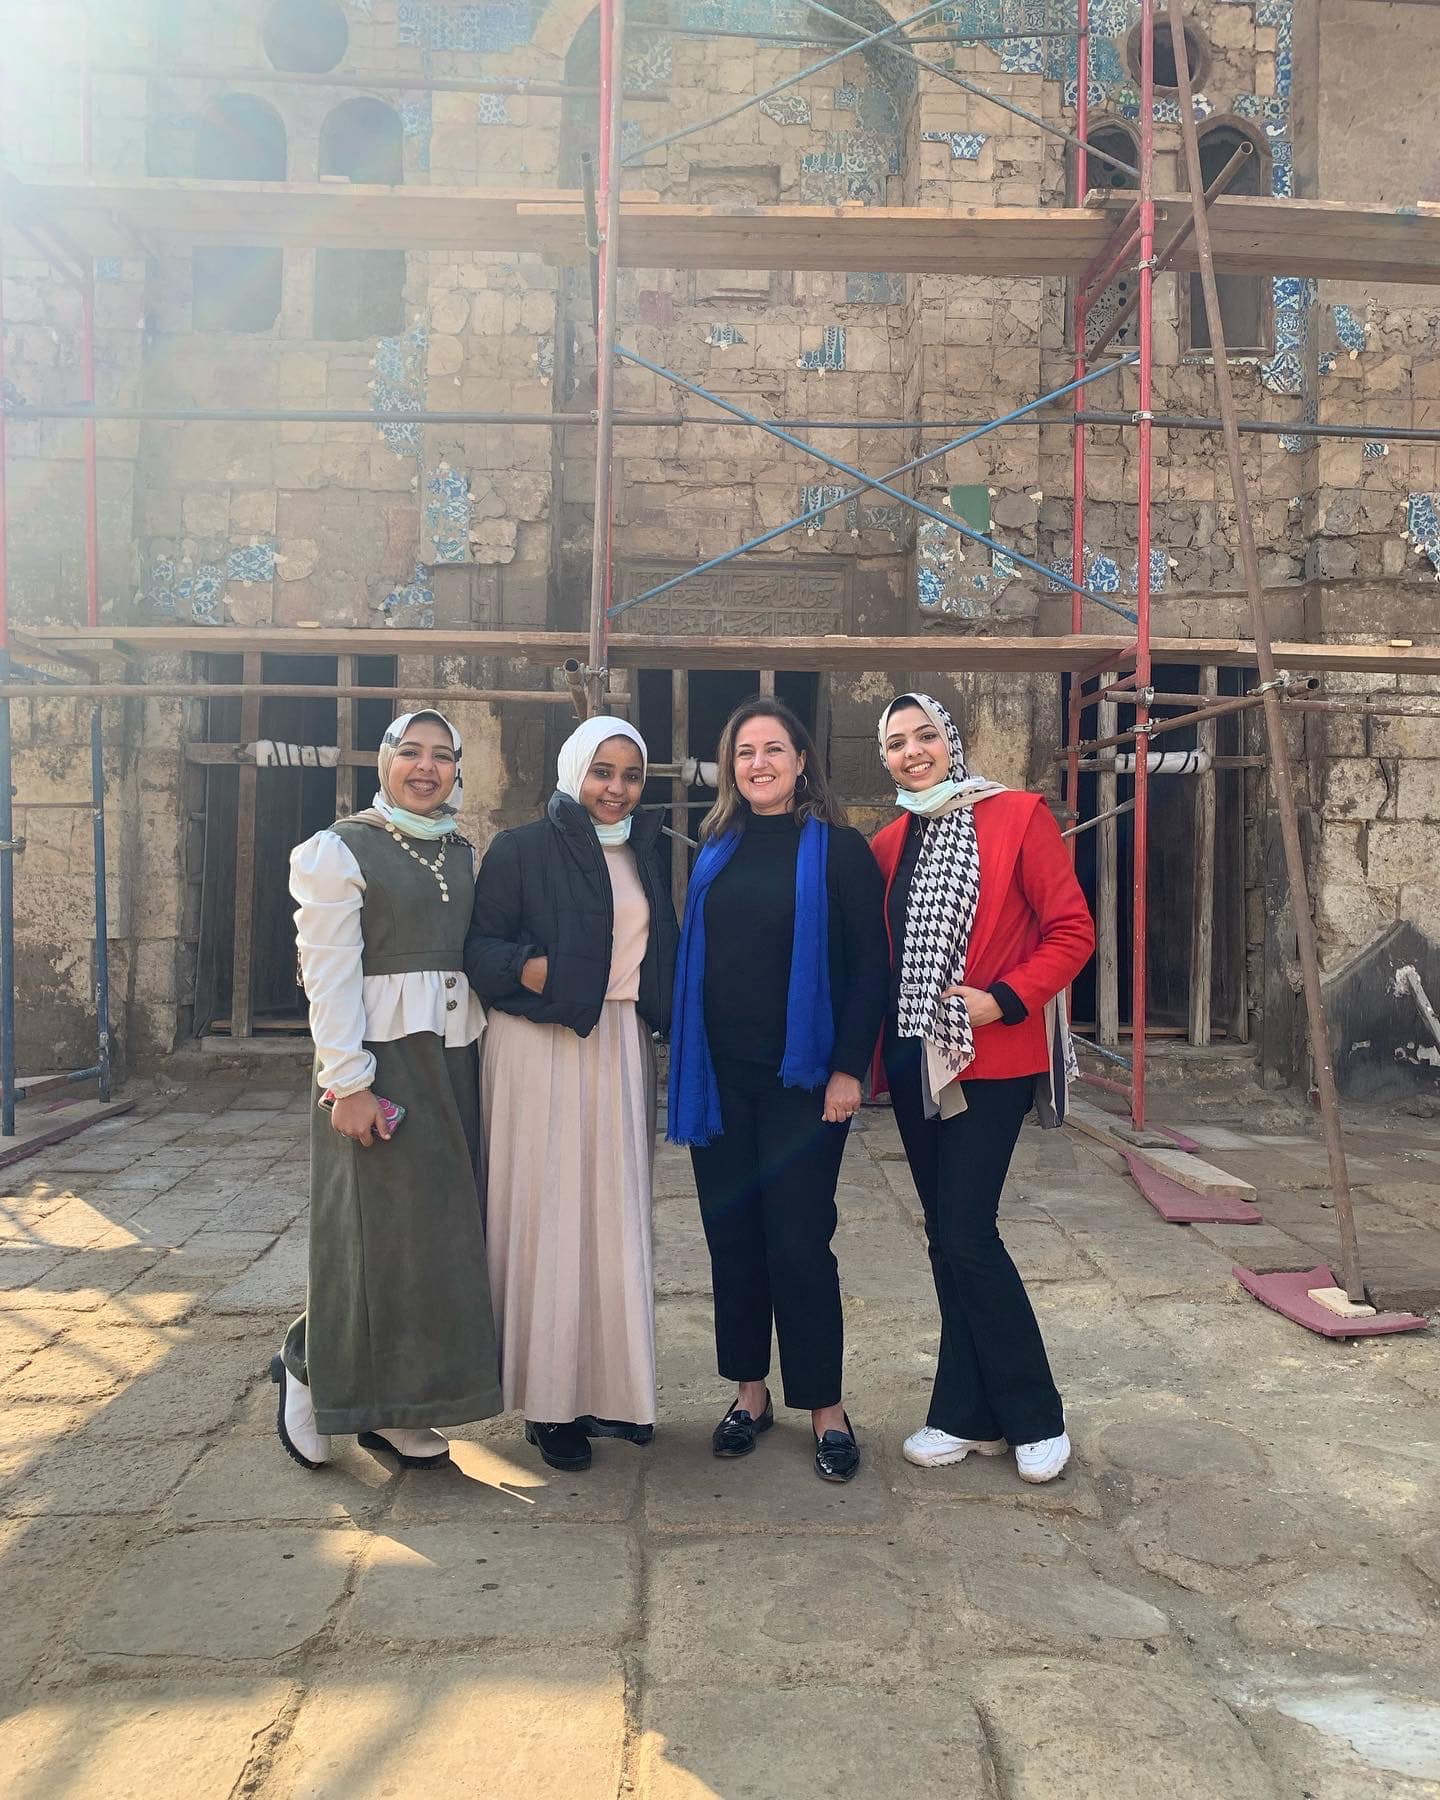 Bénédicte de Montlaur with local students interning at Takiyyat al-Gulshani in Cairo, Egypt.